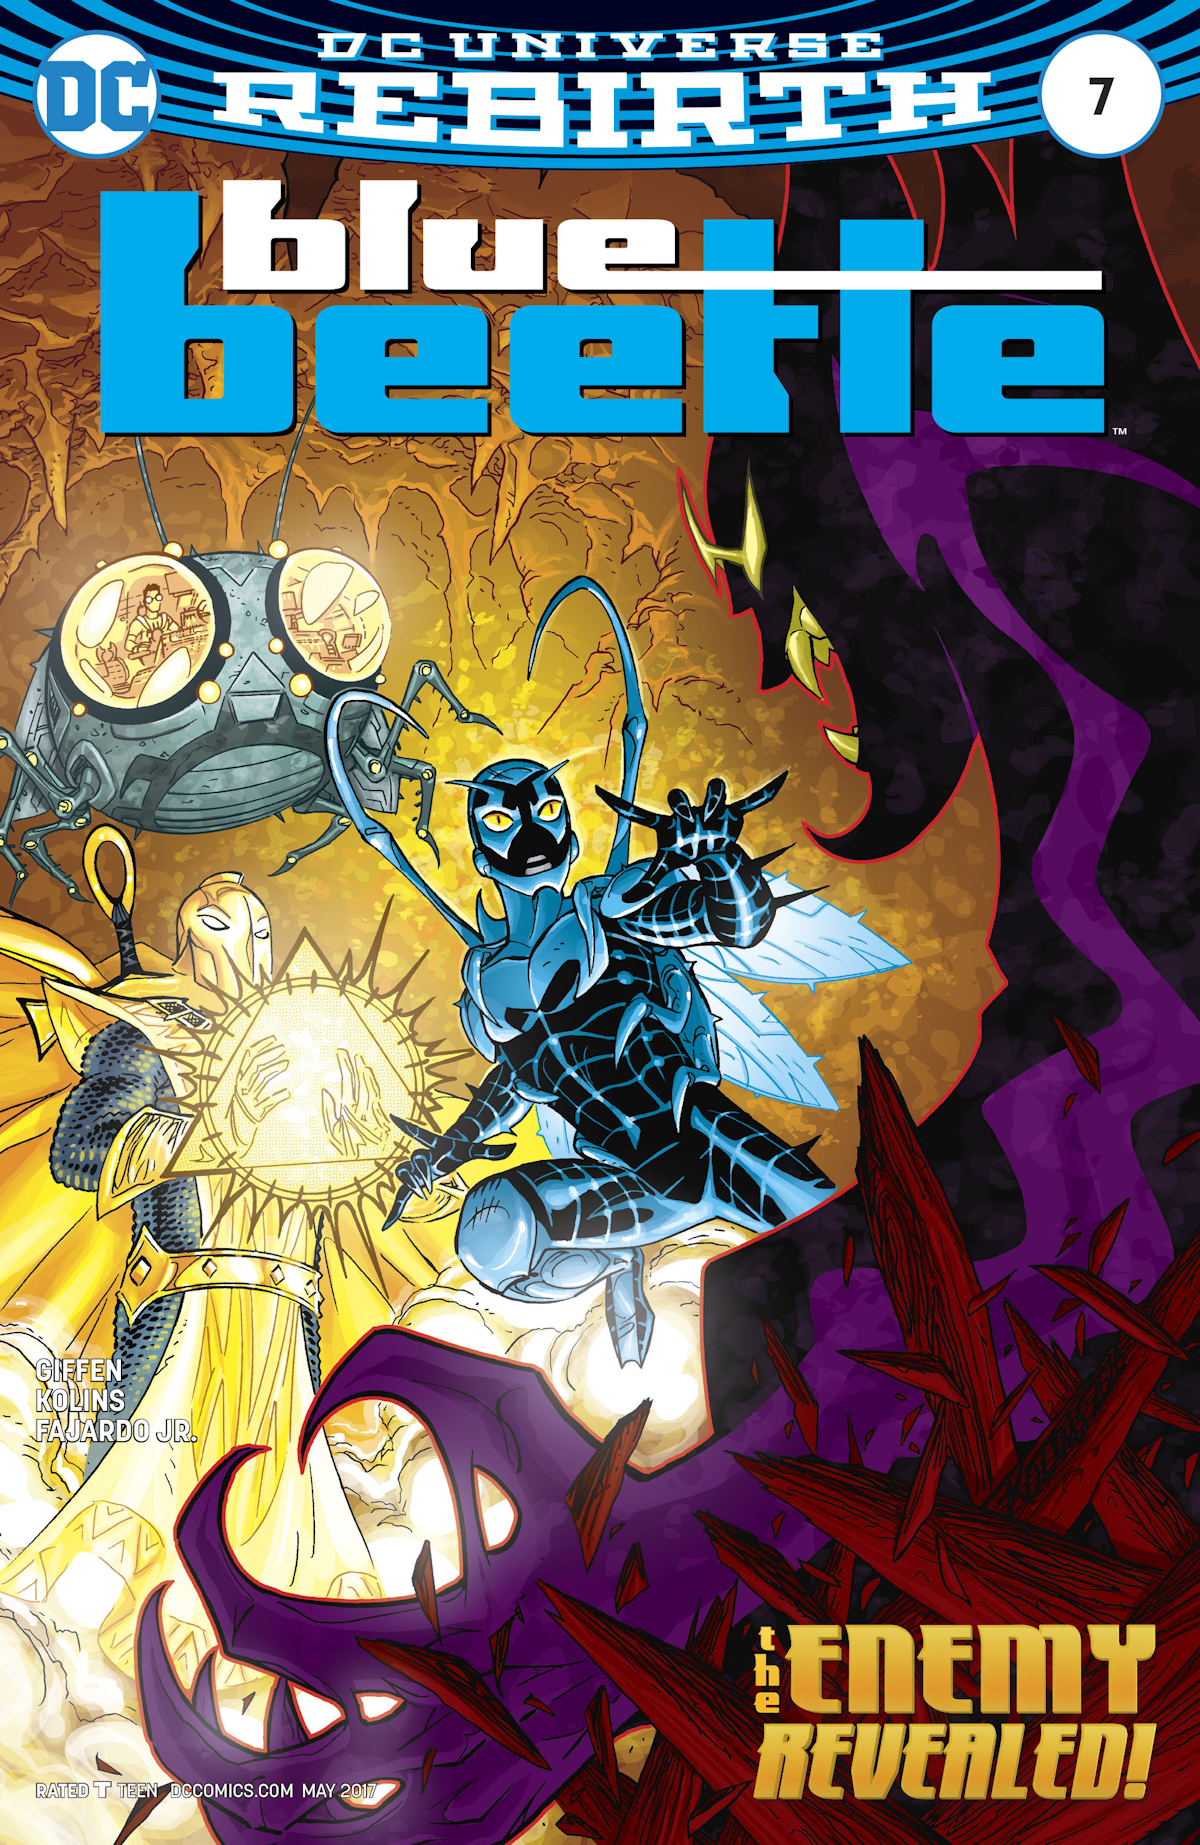 Blue Beetle Vol. 5 7 (Cover A)